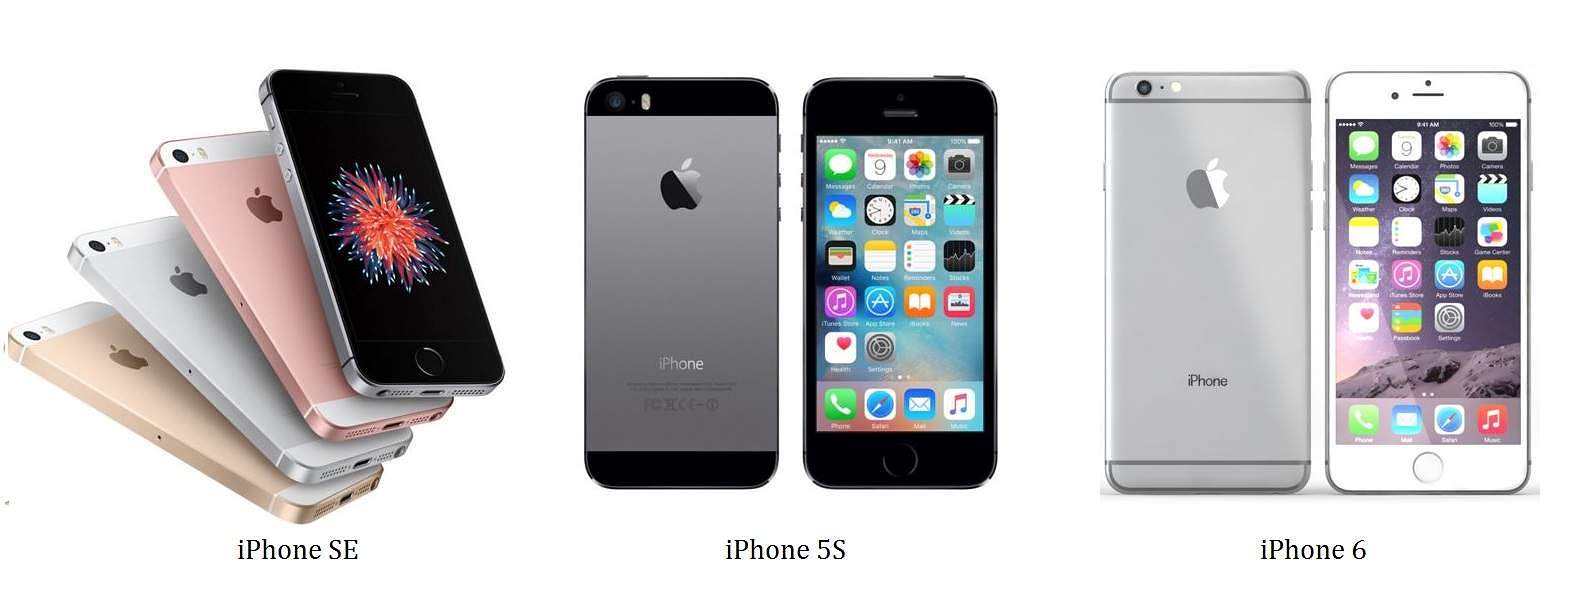 Apple iPhone SE vs iPhone 5S vs iPhone 6 Comparison ...